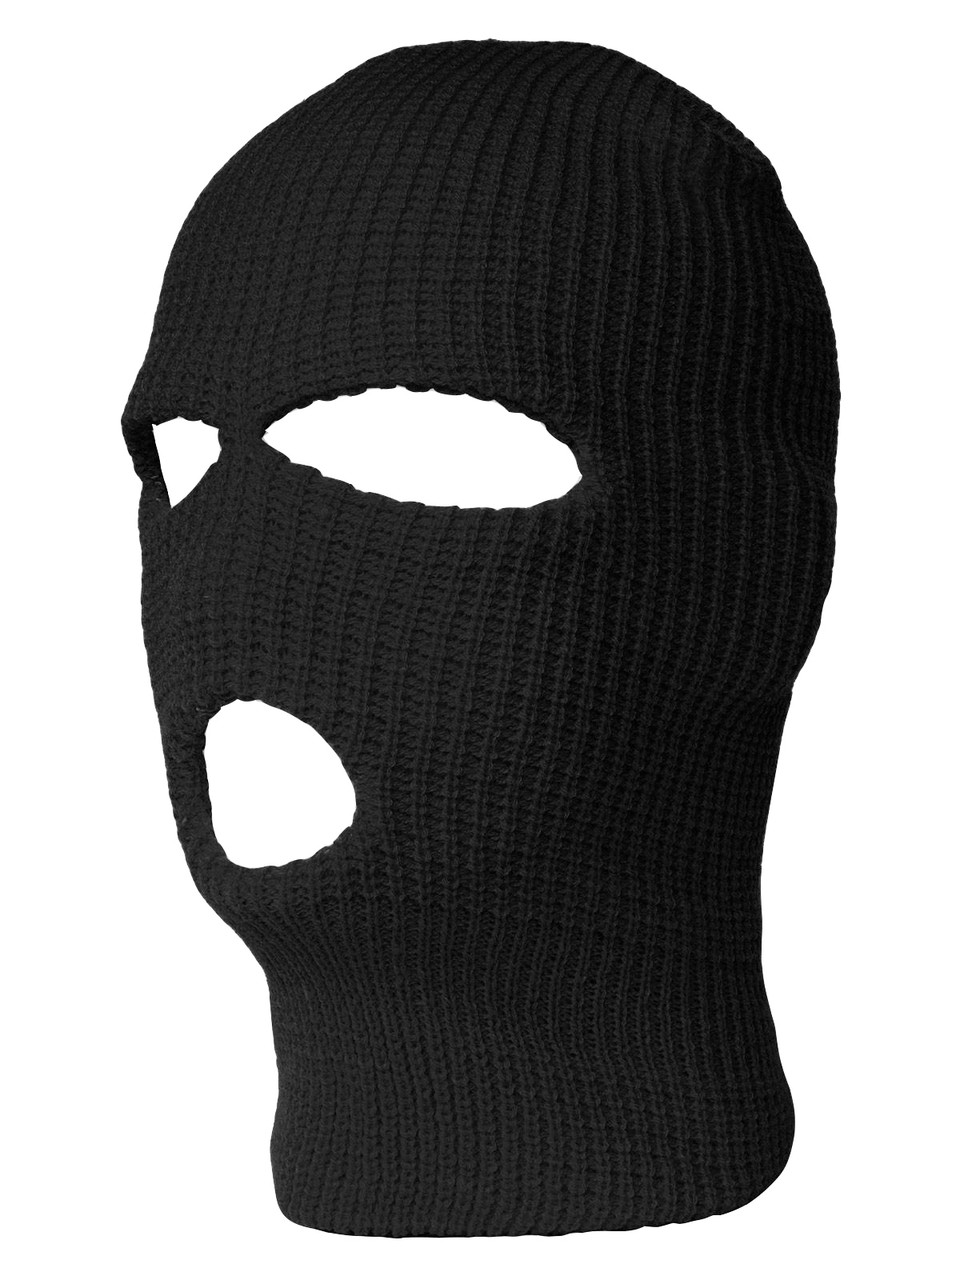 TopHeadwear's 3 Hole Face Ski Mask, Black 1pc - Gravity Trading